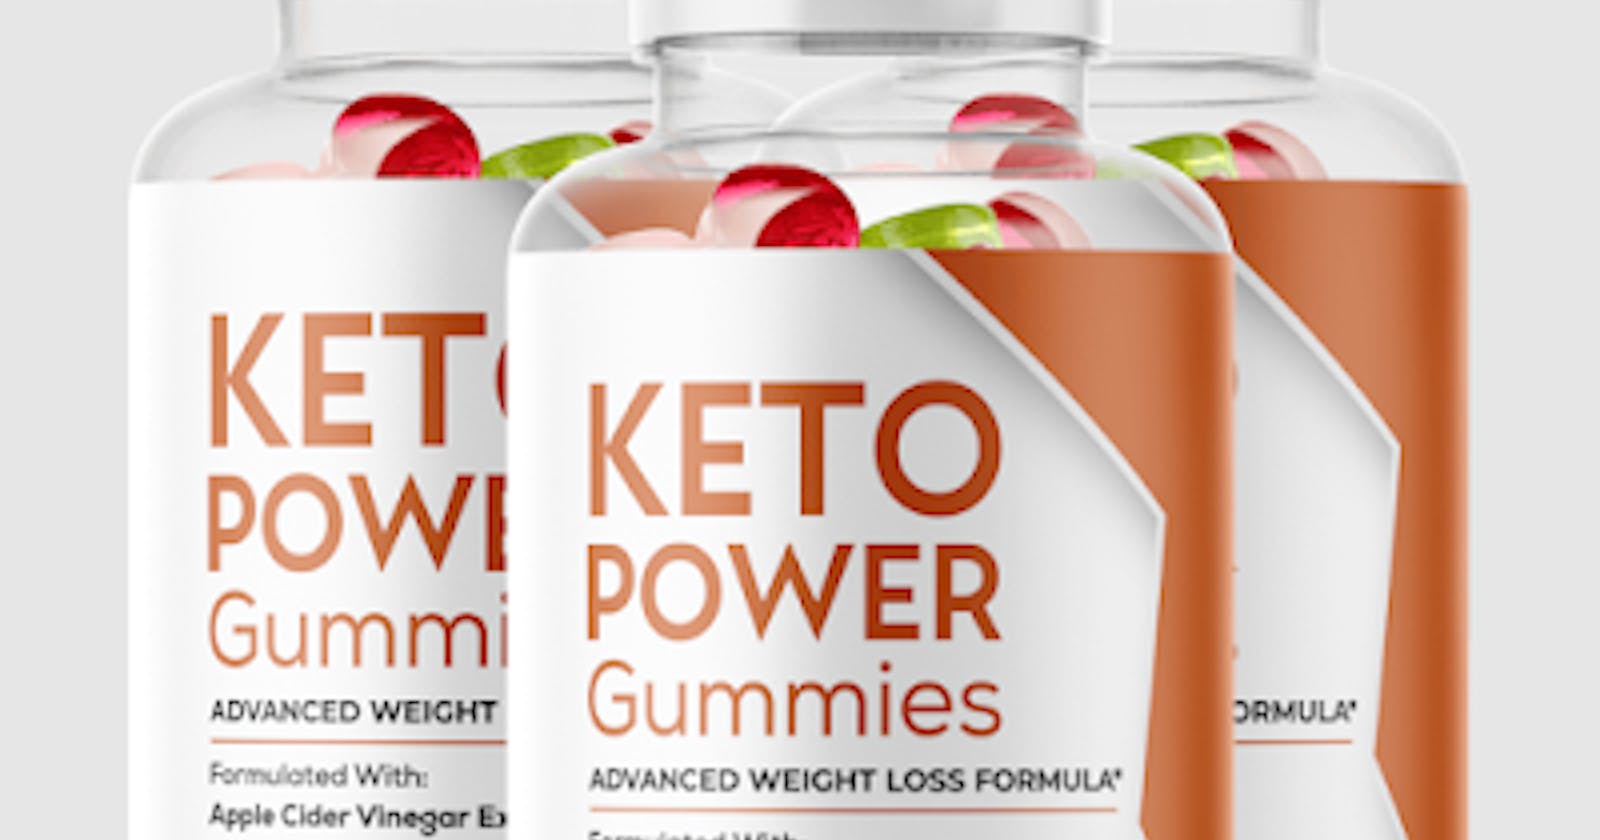 Keto Power Gummies NL SE: Nourish Your Body, Slim Your Figure